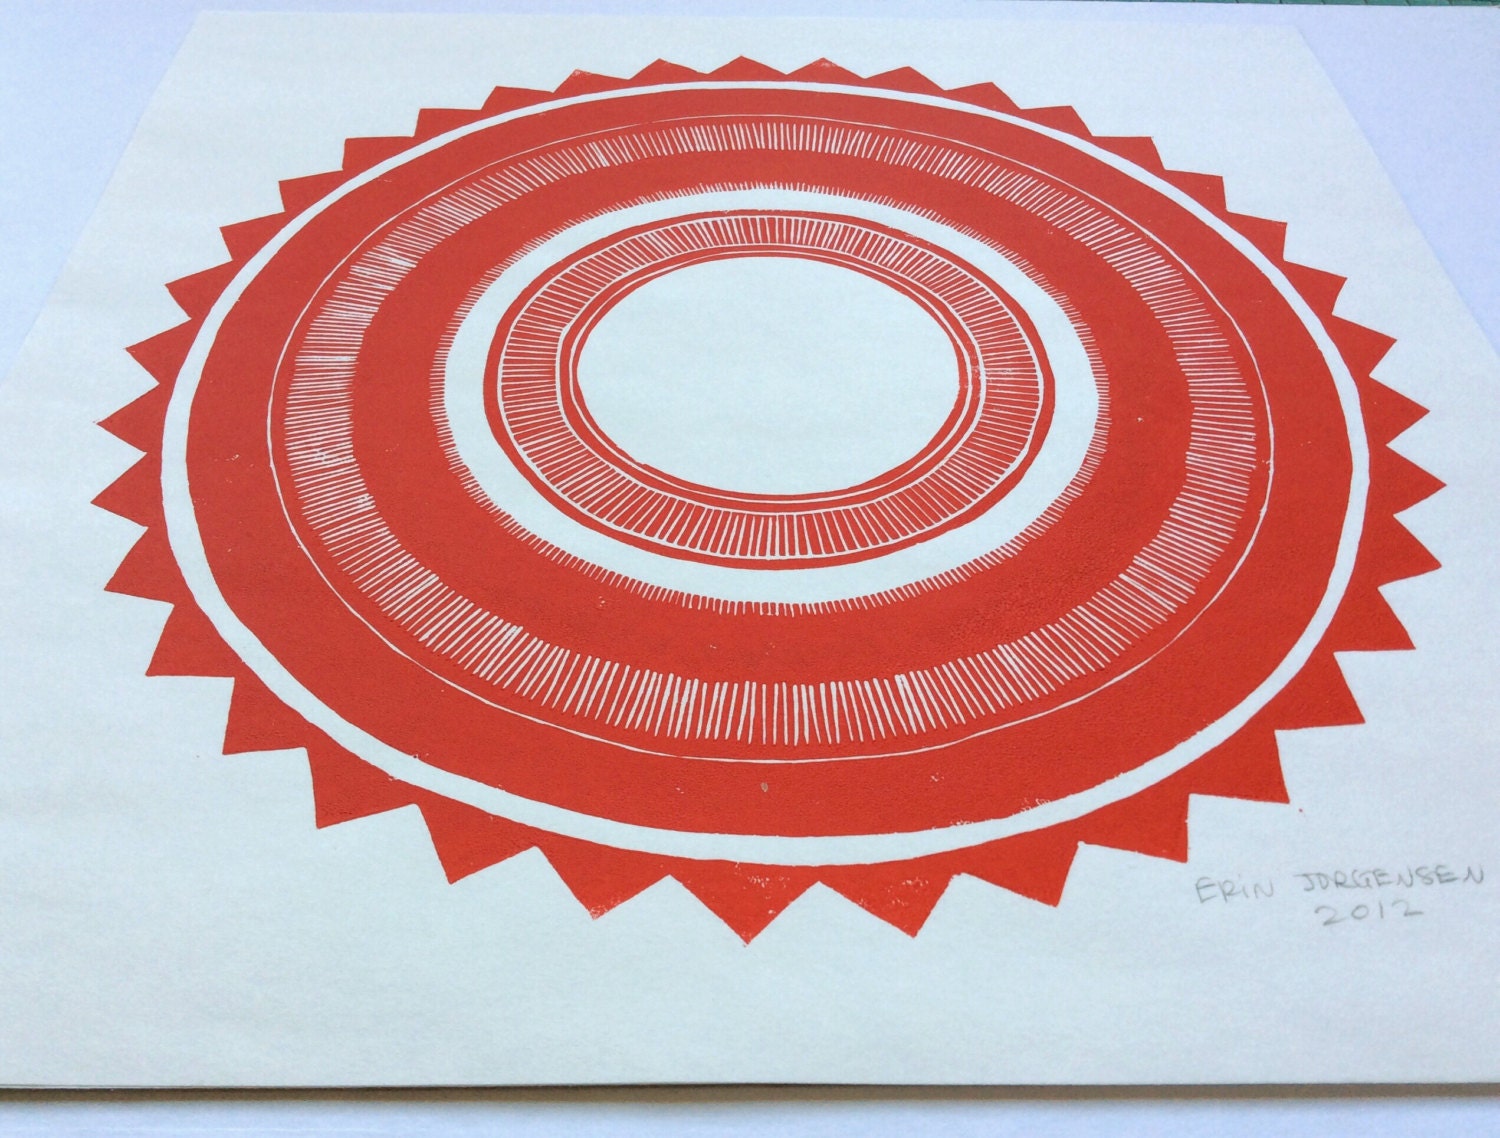 linoleum block print RED SUN 12x12 / geometric art by nourart